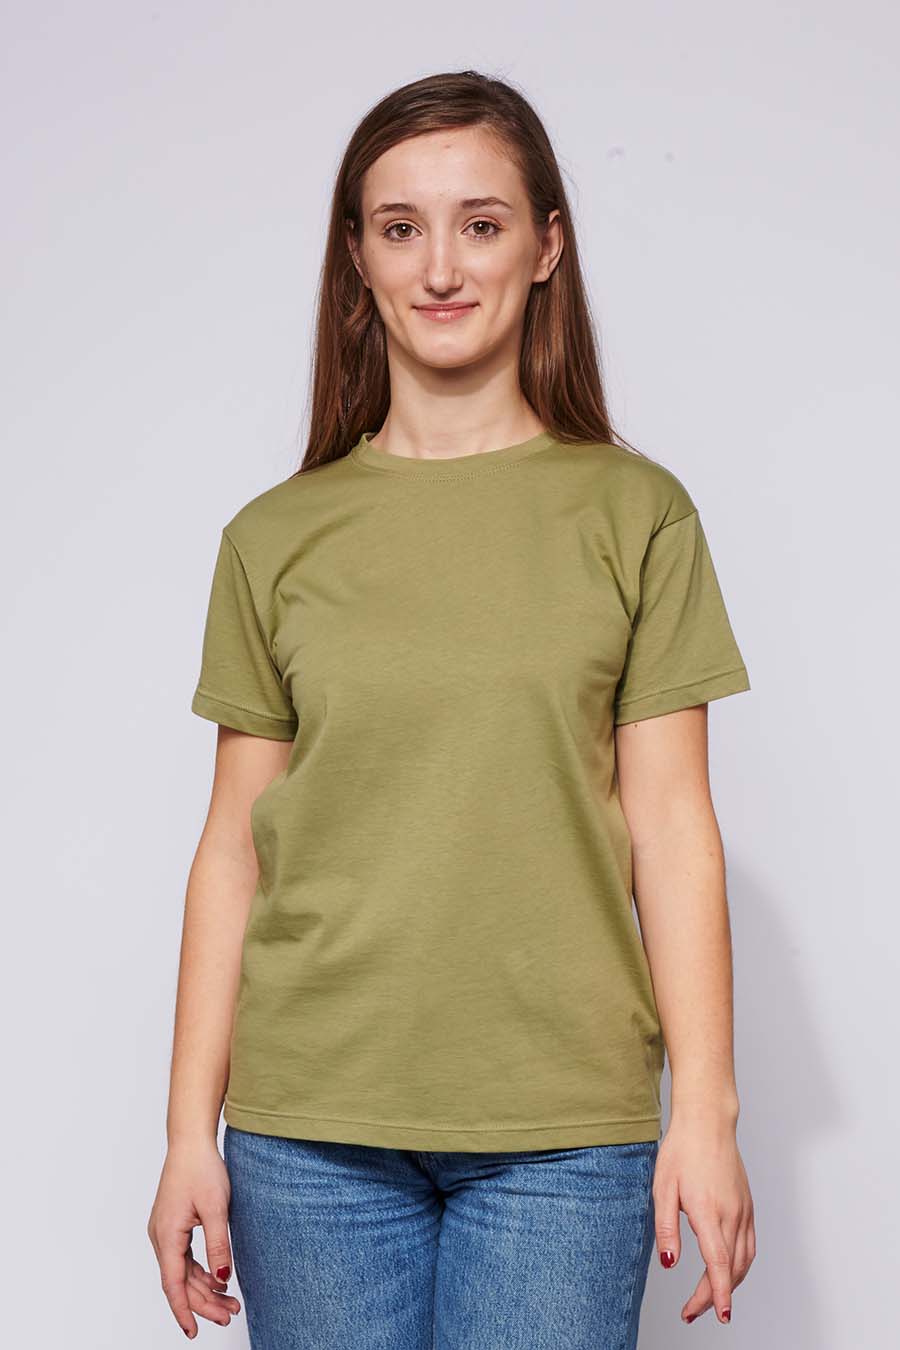 Tee-shirt Femme made in France en coton bio BRIGITTE kaki - FIL ROUGE